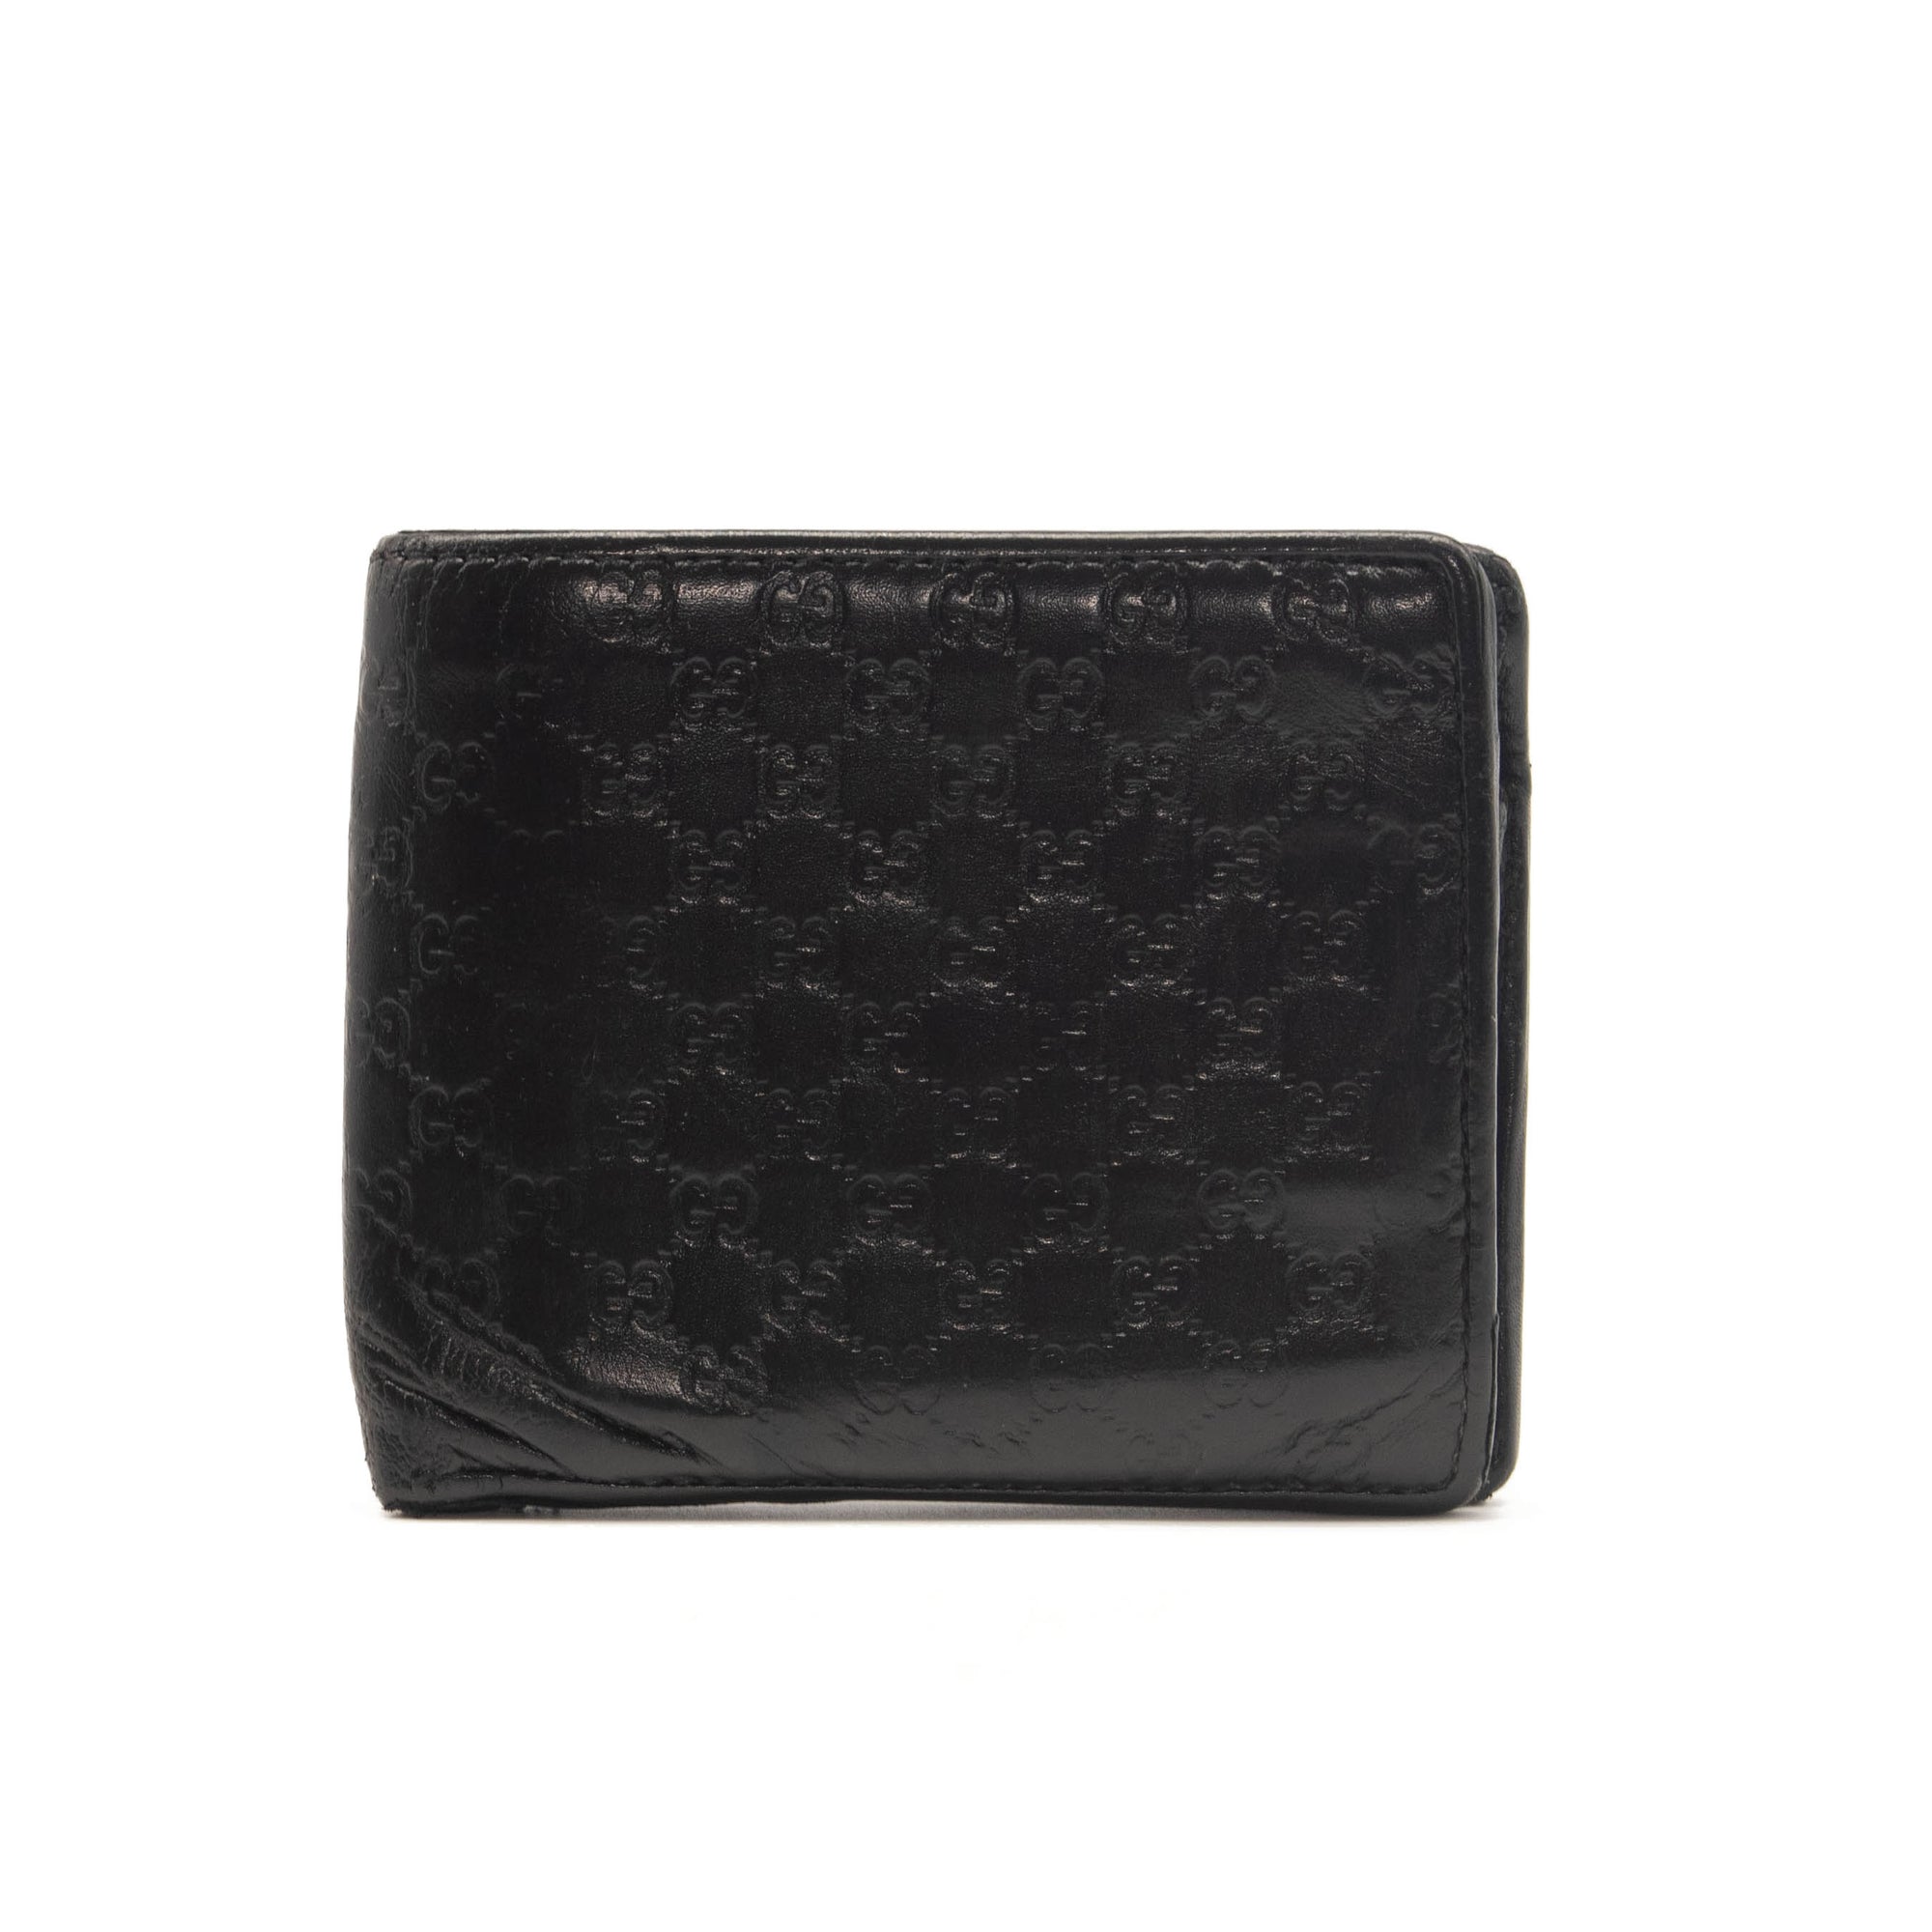 GUCCI Men's Microguccissima GG Logo Leather Coin Wallet Black